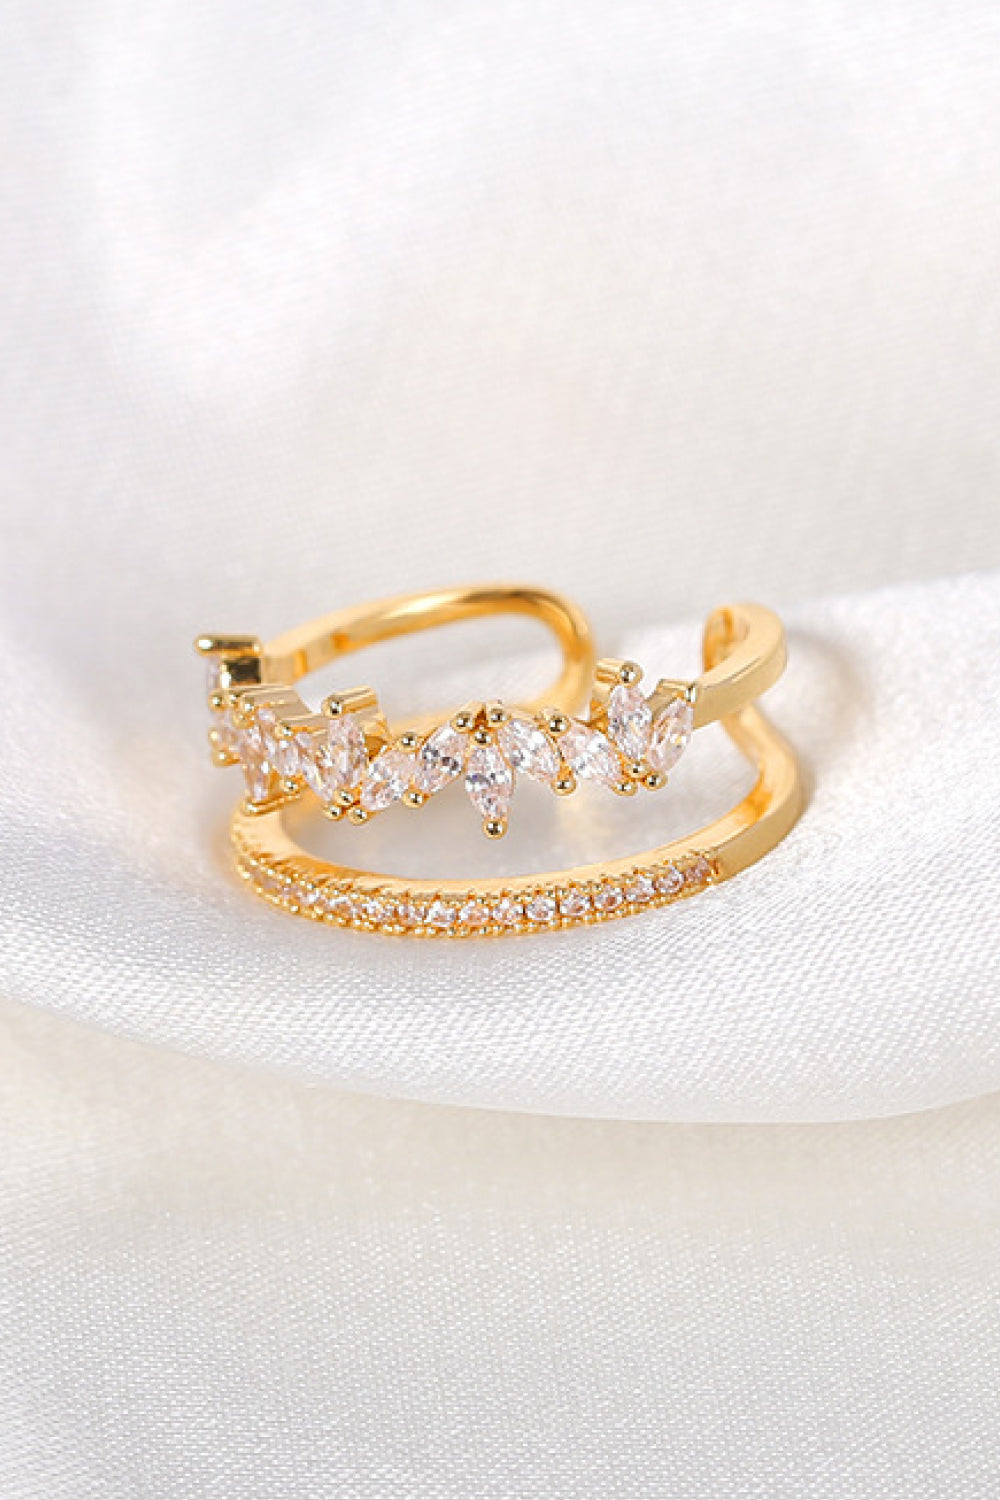 Zircon ring, split shank design, open ring, jewelry, fashion accessory, statement piece, elegant ring, glamorous accessory, minimalist style, adjustable ring